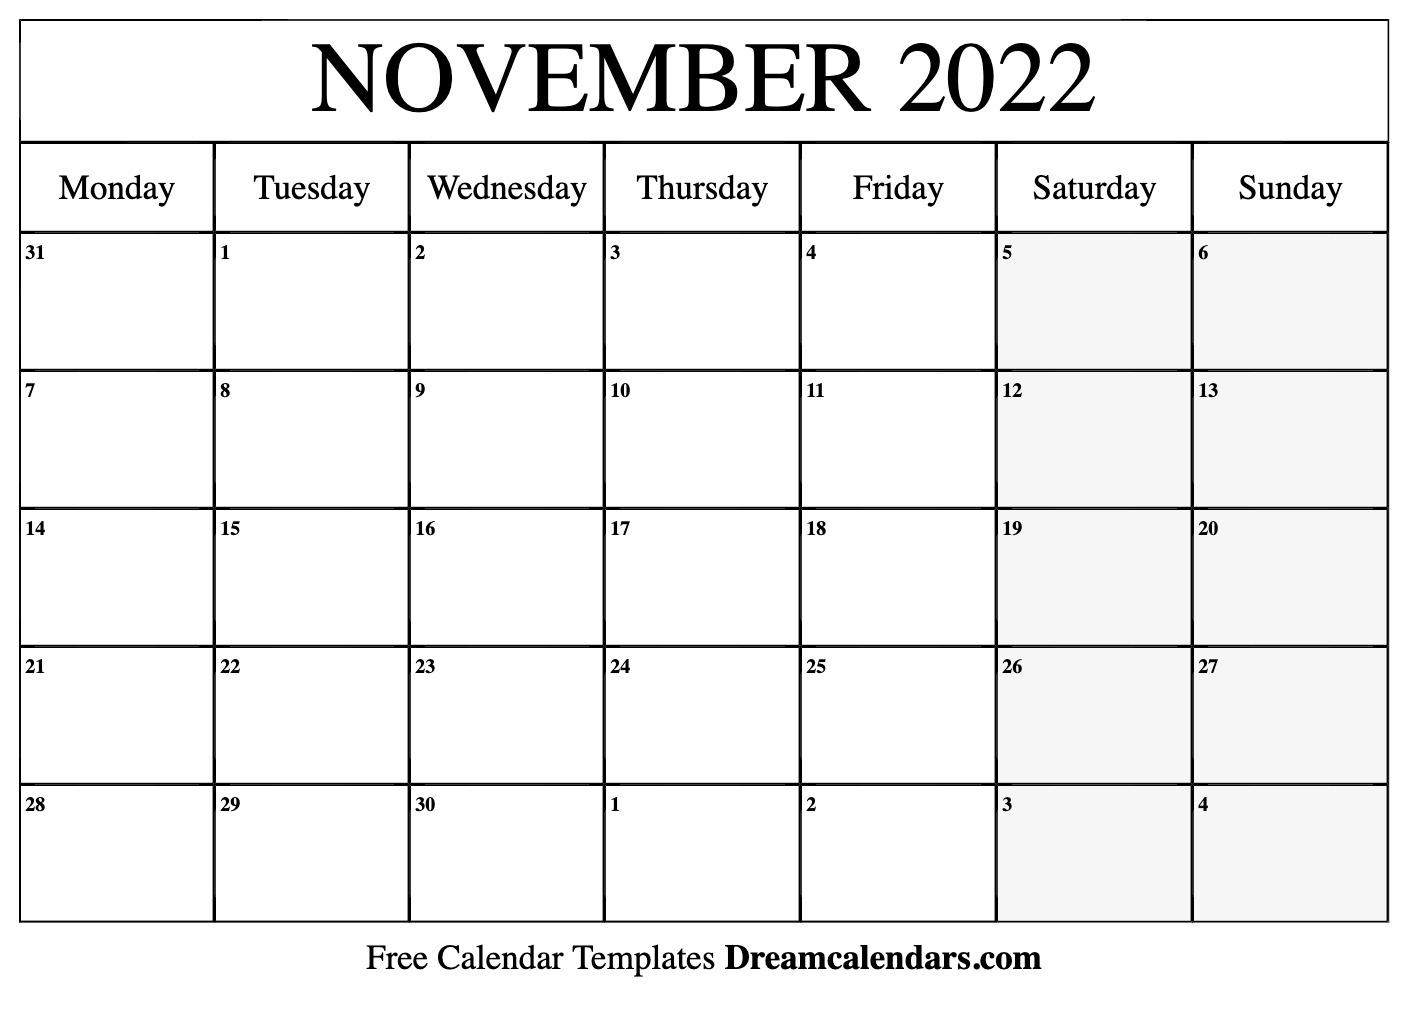 November 2022 Monthly Calendar - December Calendar 2022